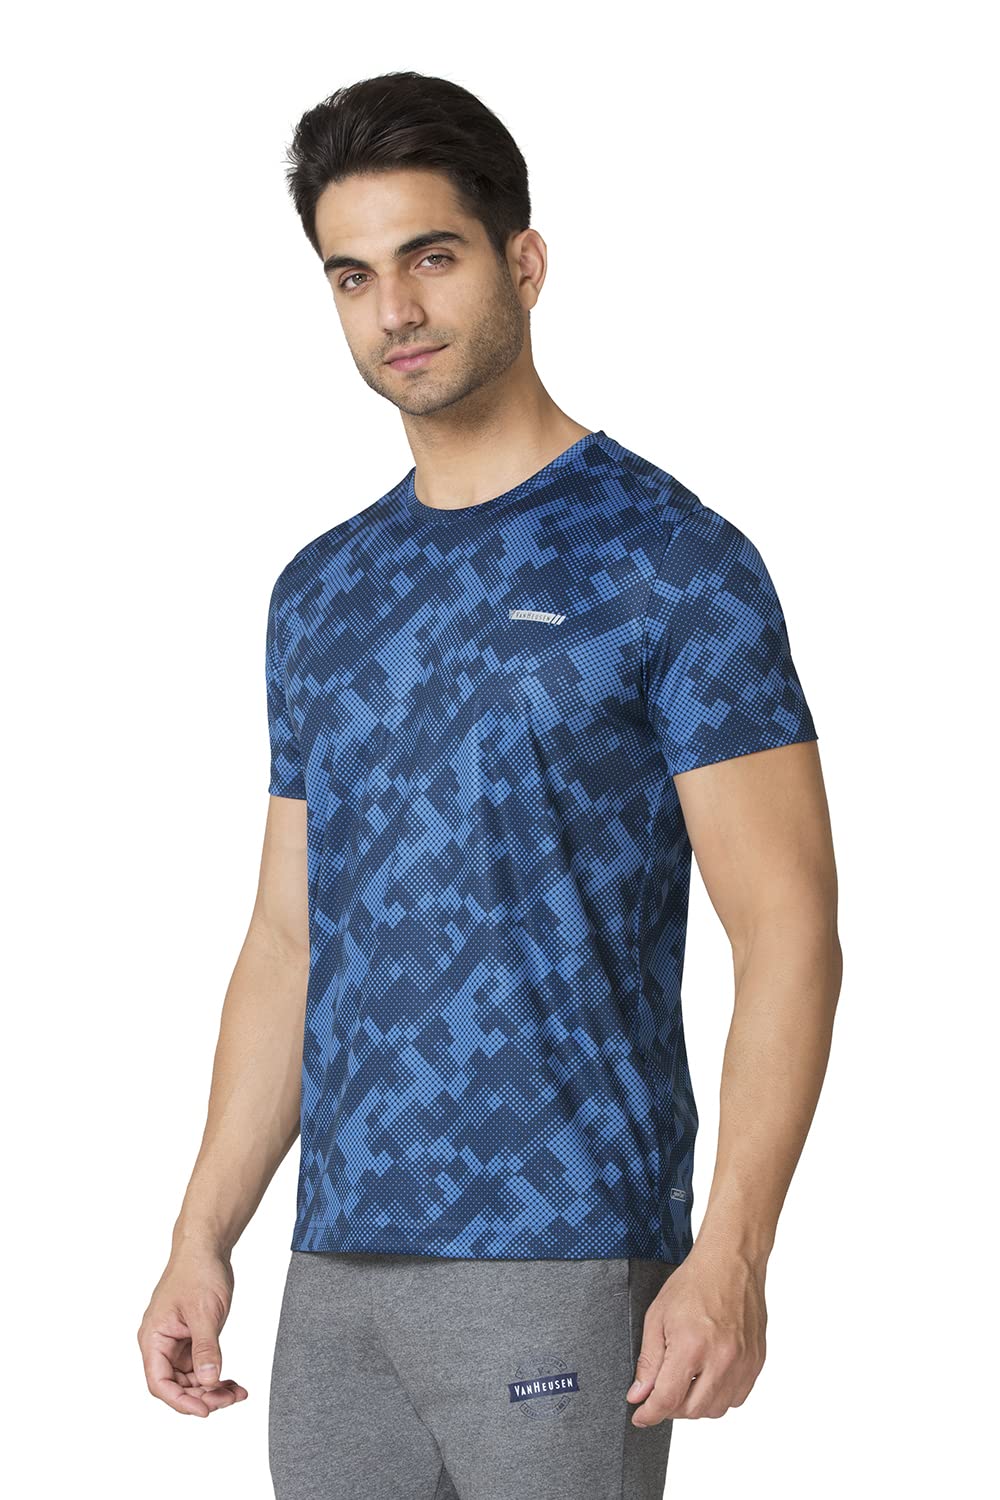 Van Heusen Performance Men T-Shirt - 100% Polyester Interlock - Swift Dry, Crew Neck, Short Sleeve, Allover Print_61008_Limoges Blue_L